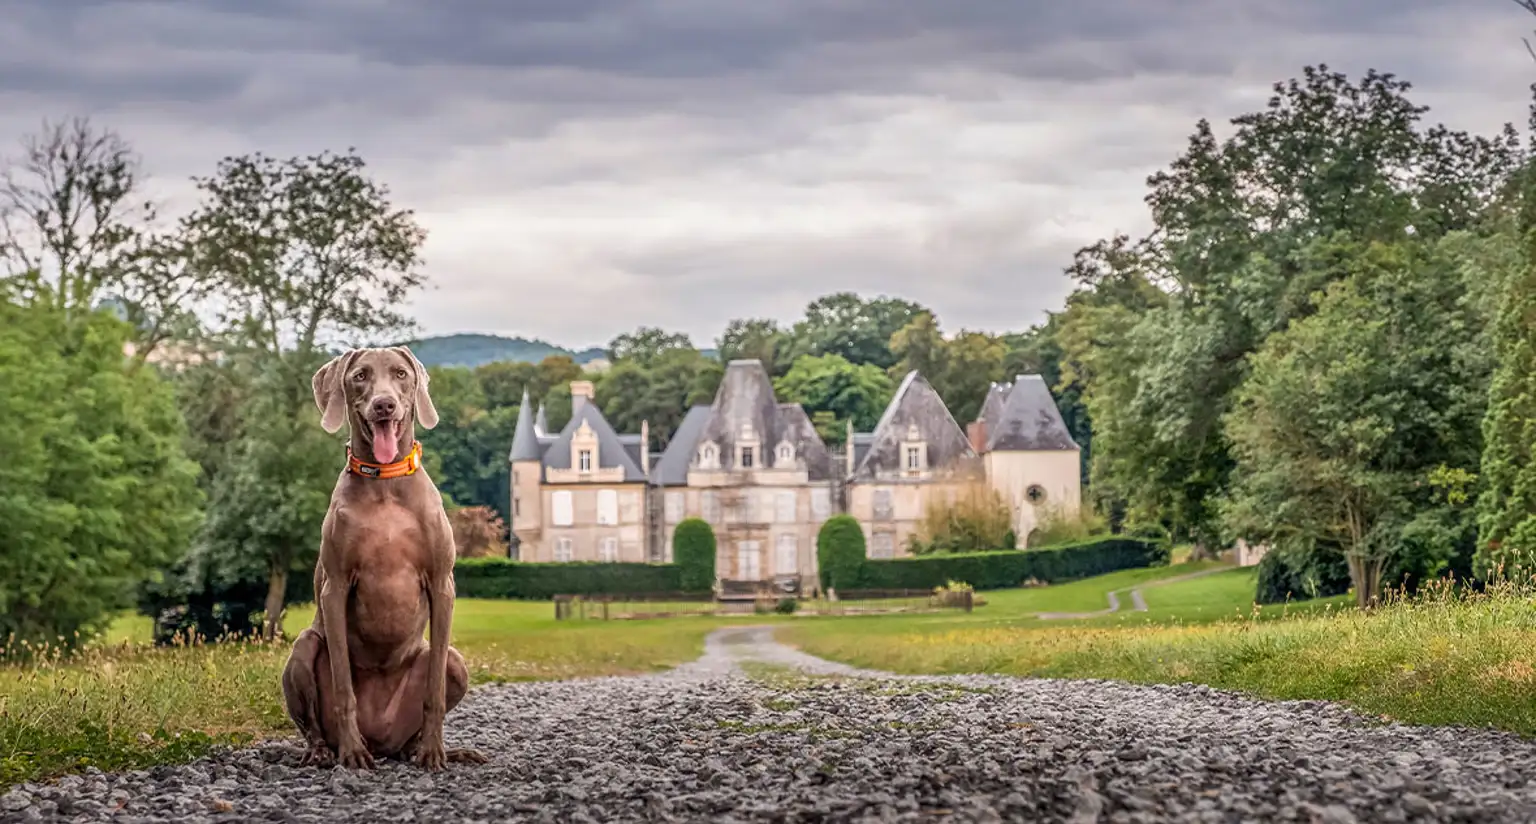 Dog friendly villas in France